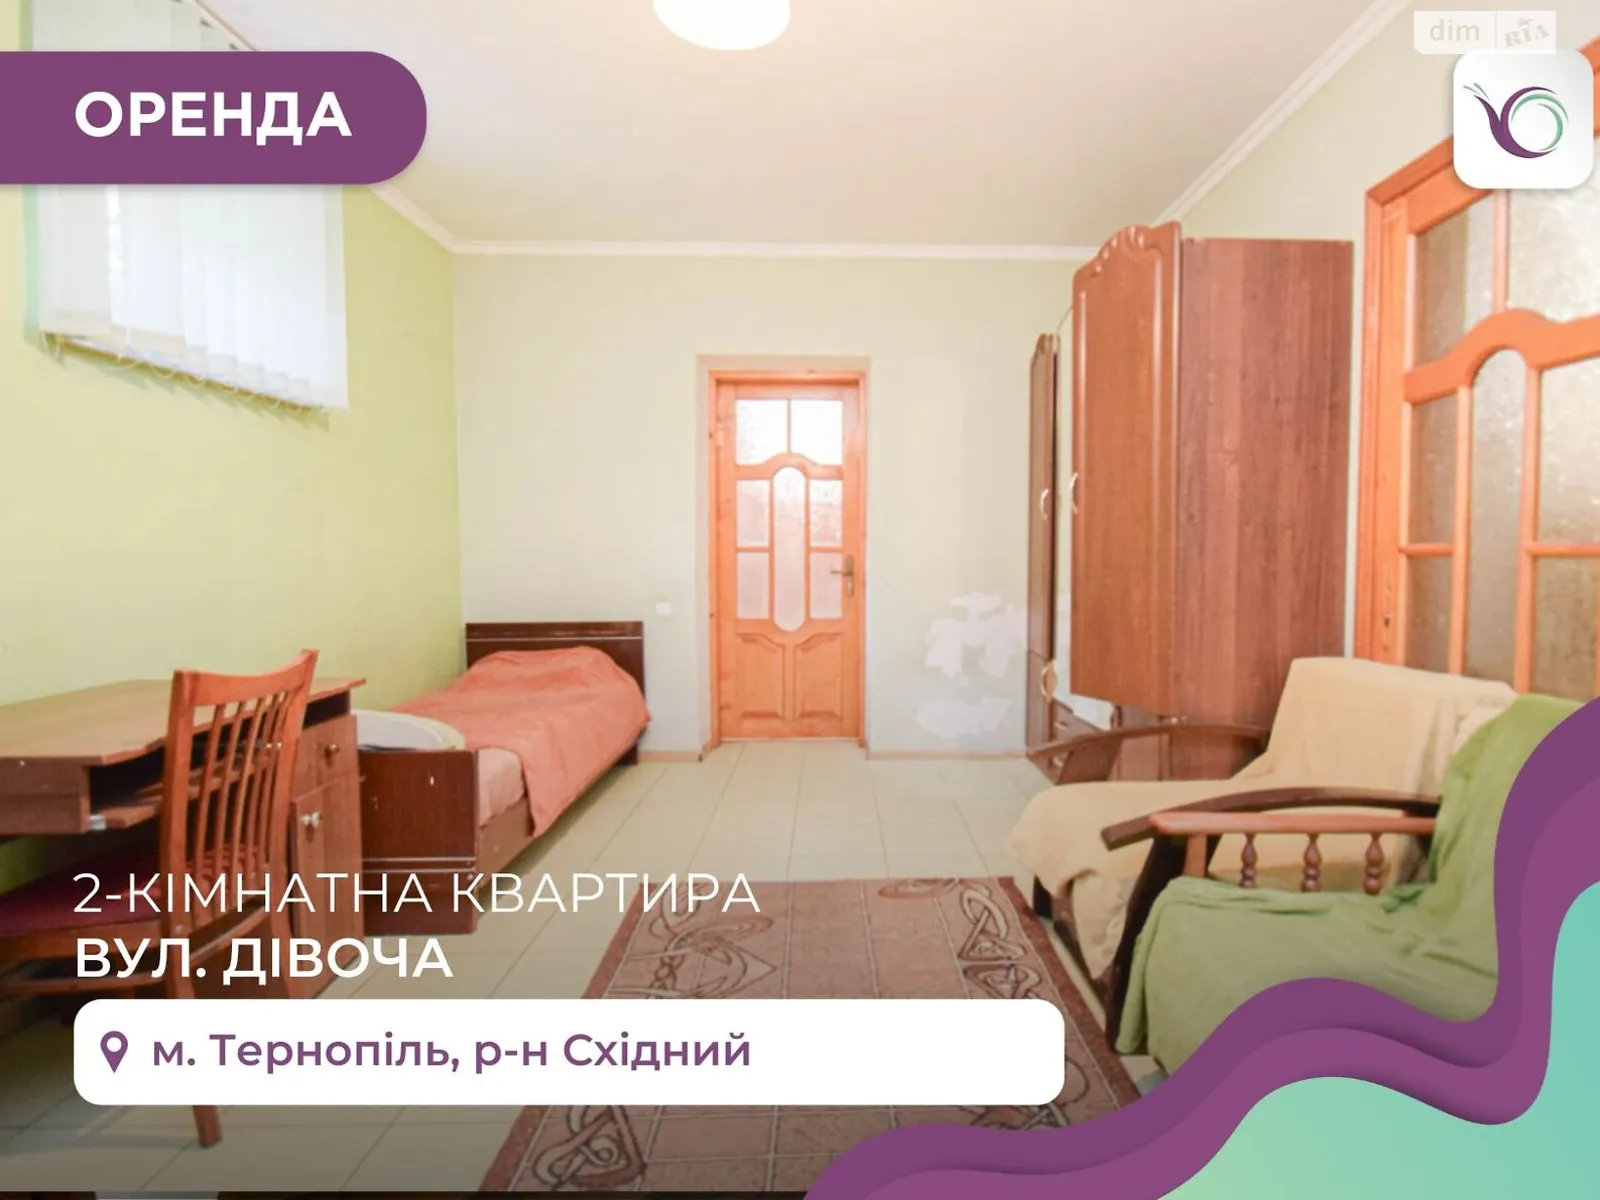 2-кімнатна квартира 80 кв. м у Тернополі, цена: 210 $ - фото 1